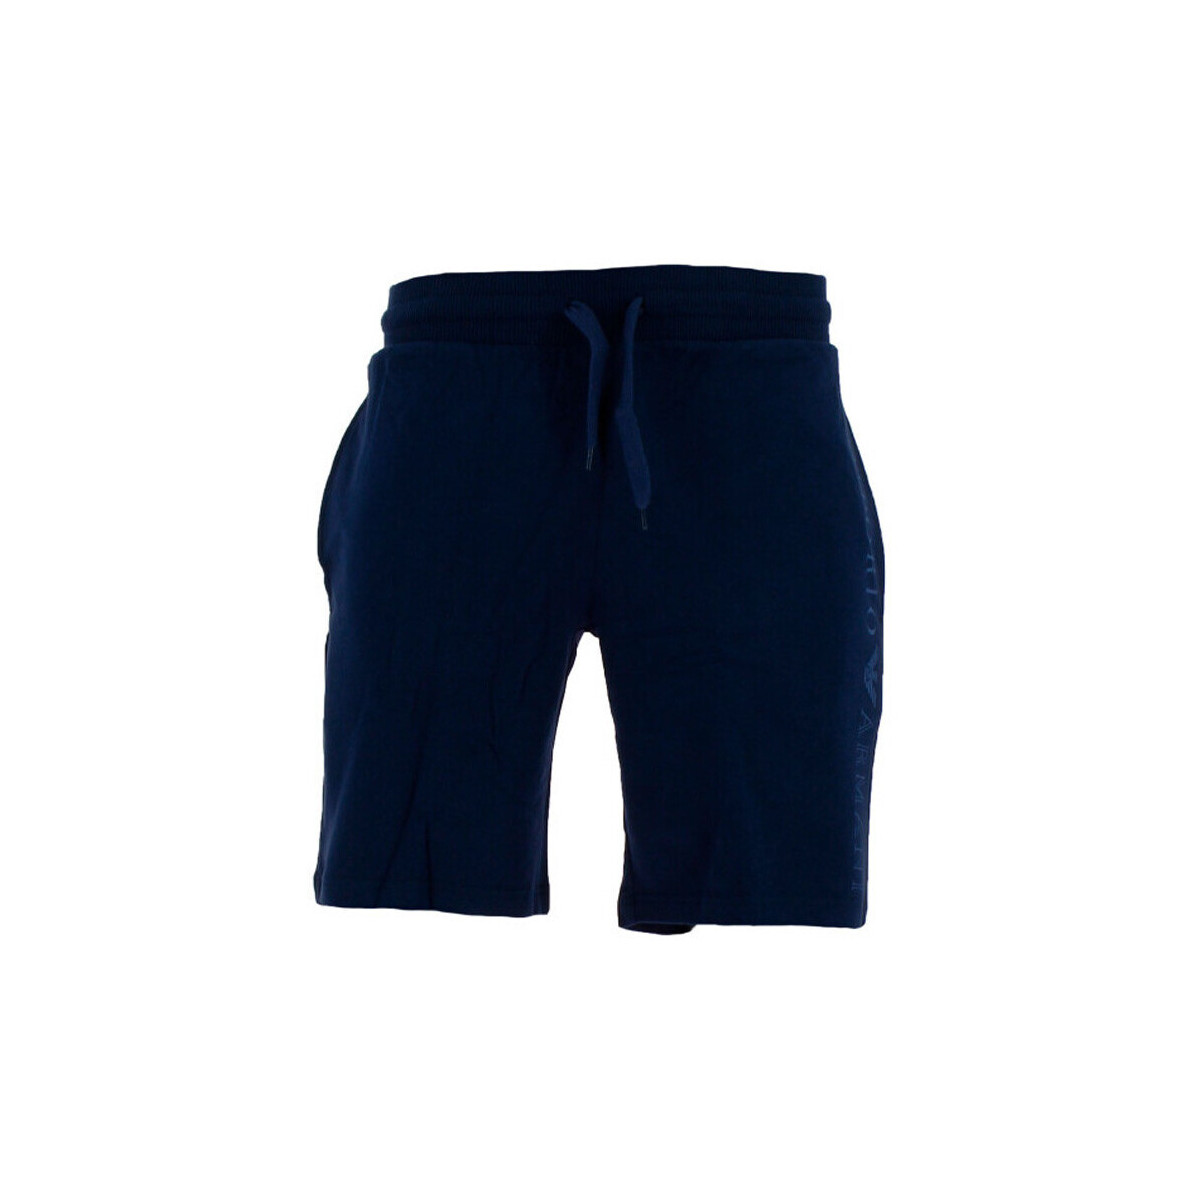 Vêtements Homme Shorts / Bermudas Ea7 Emporio Armani LONGWEAR Bleu